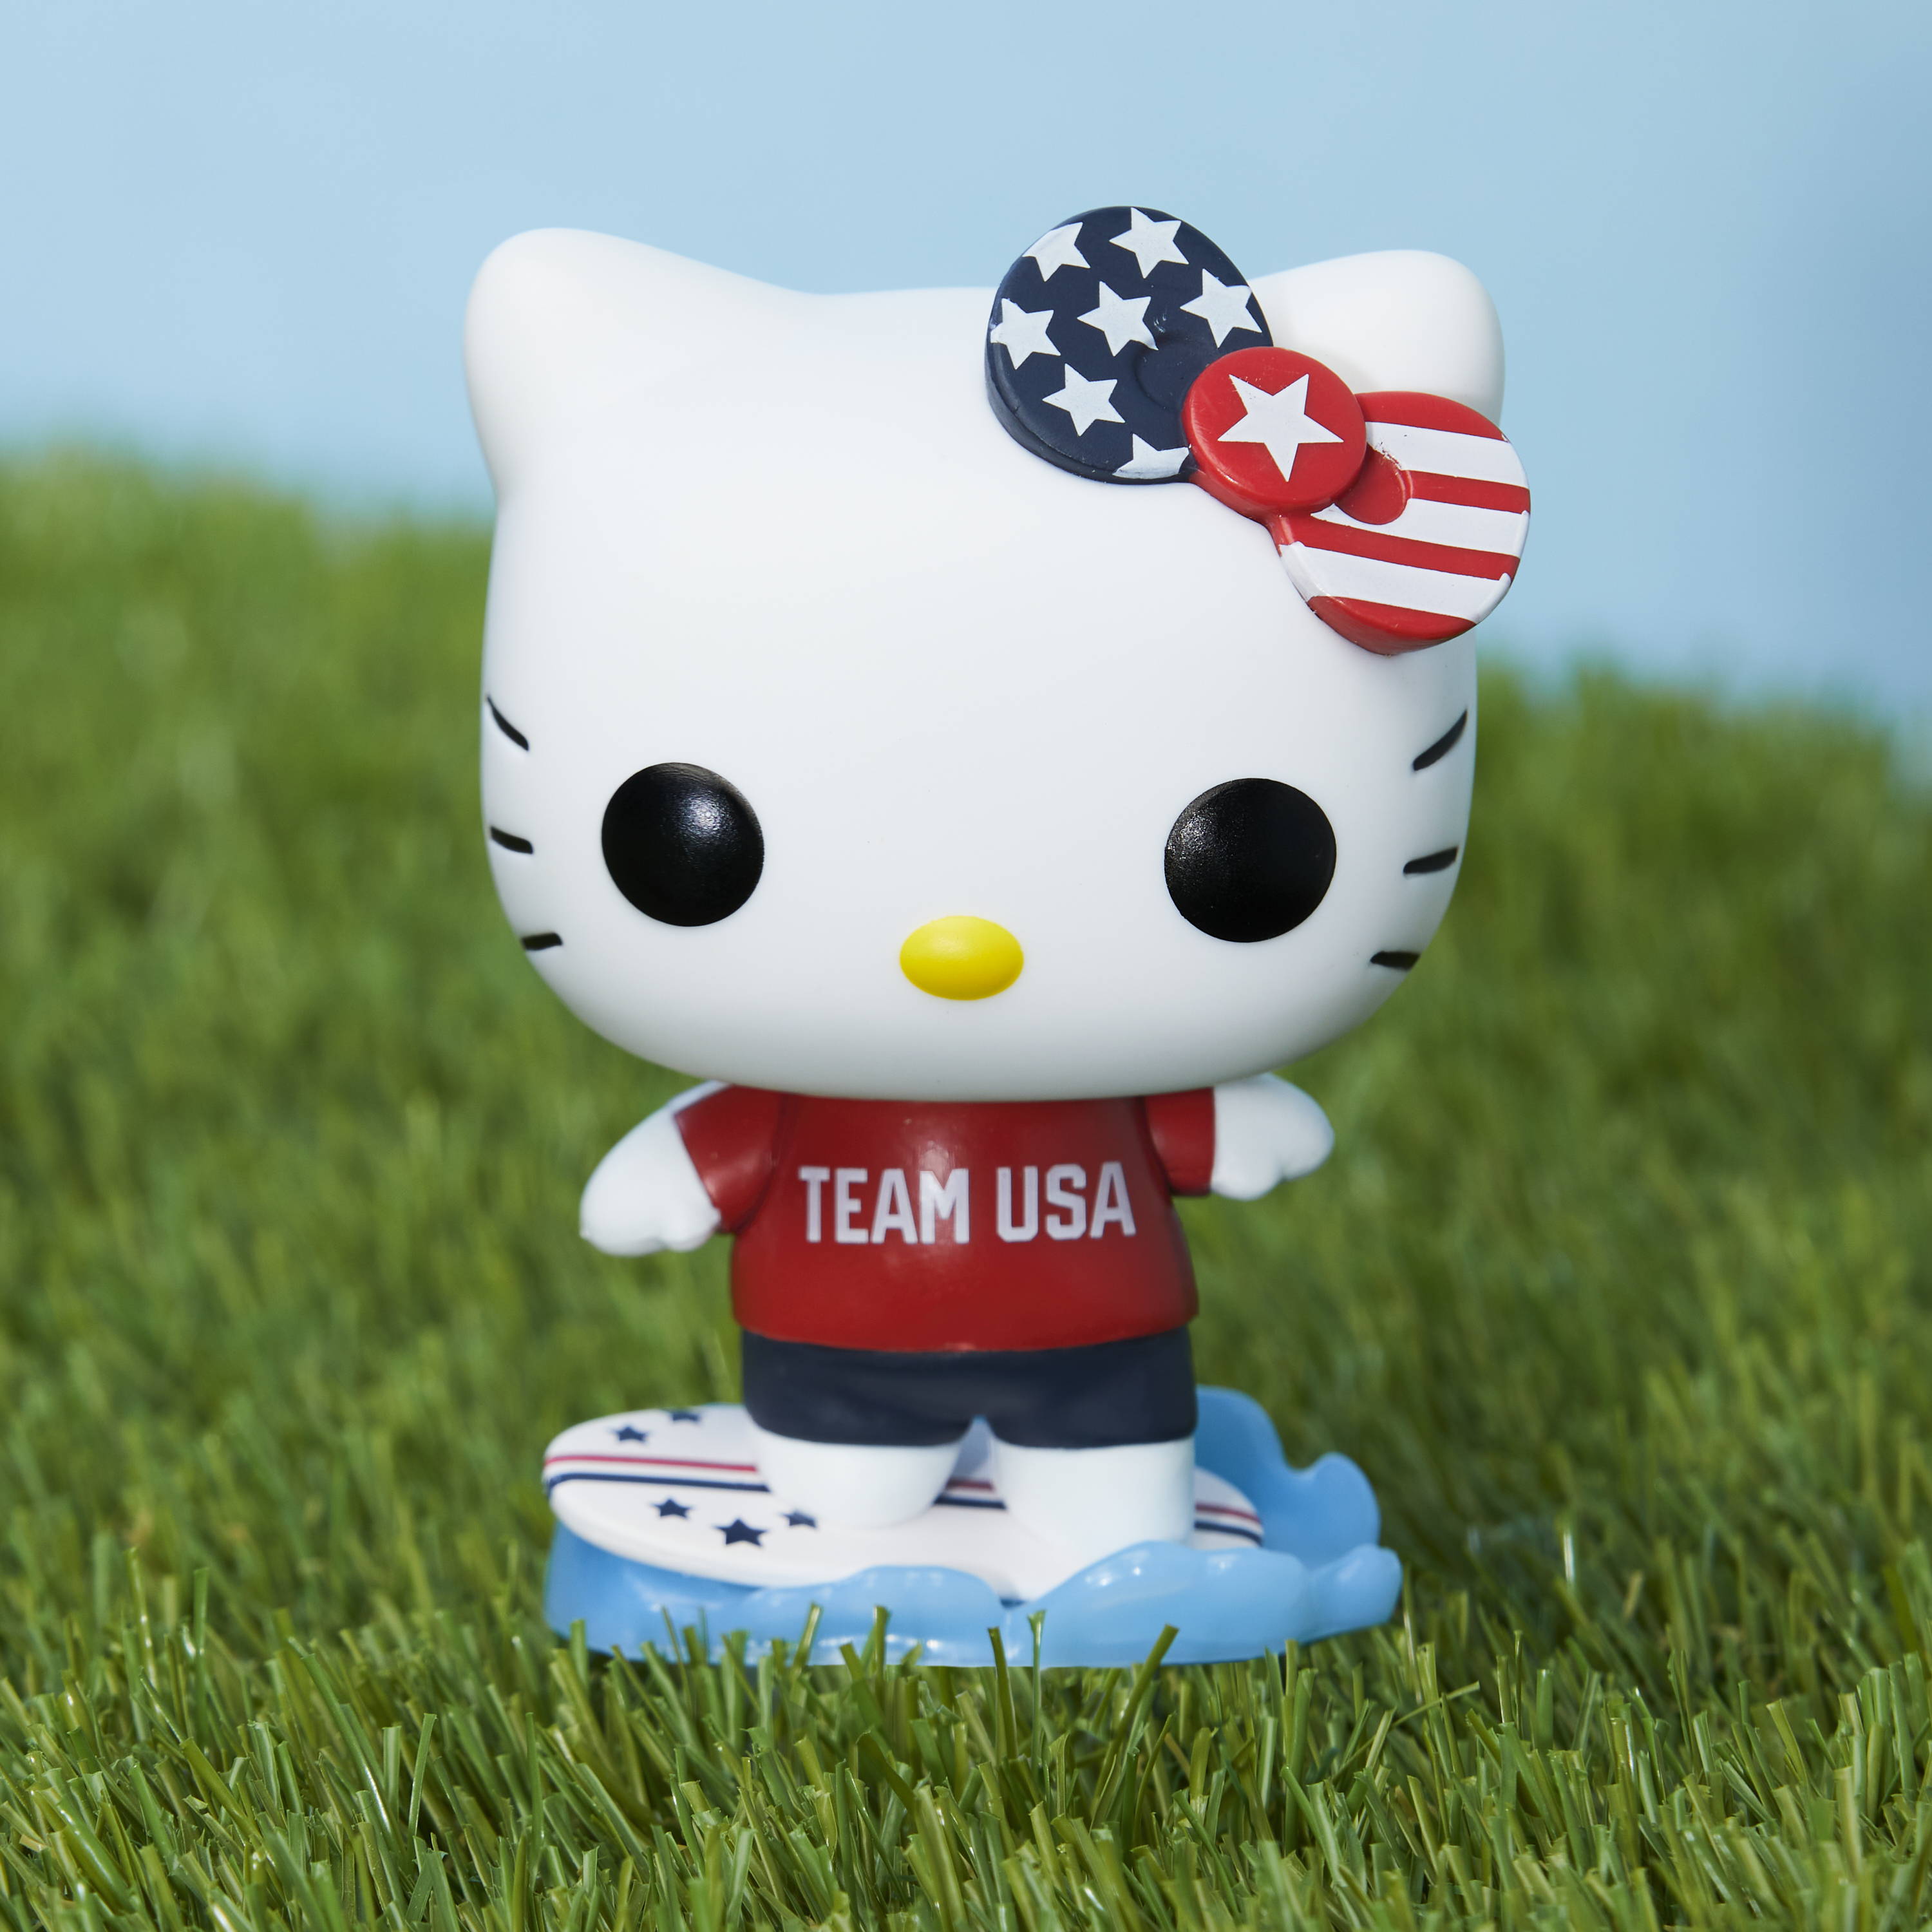 honavusa Team USA x Hello Kitty Glitter Pin